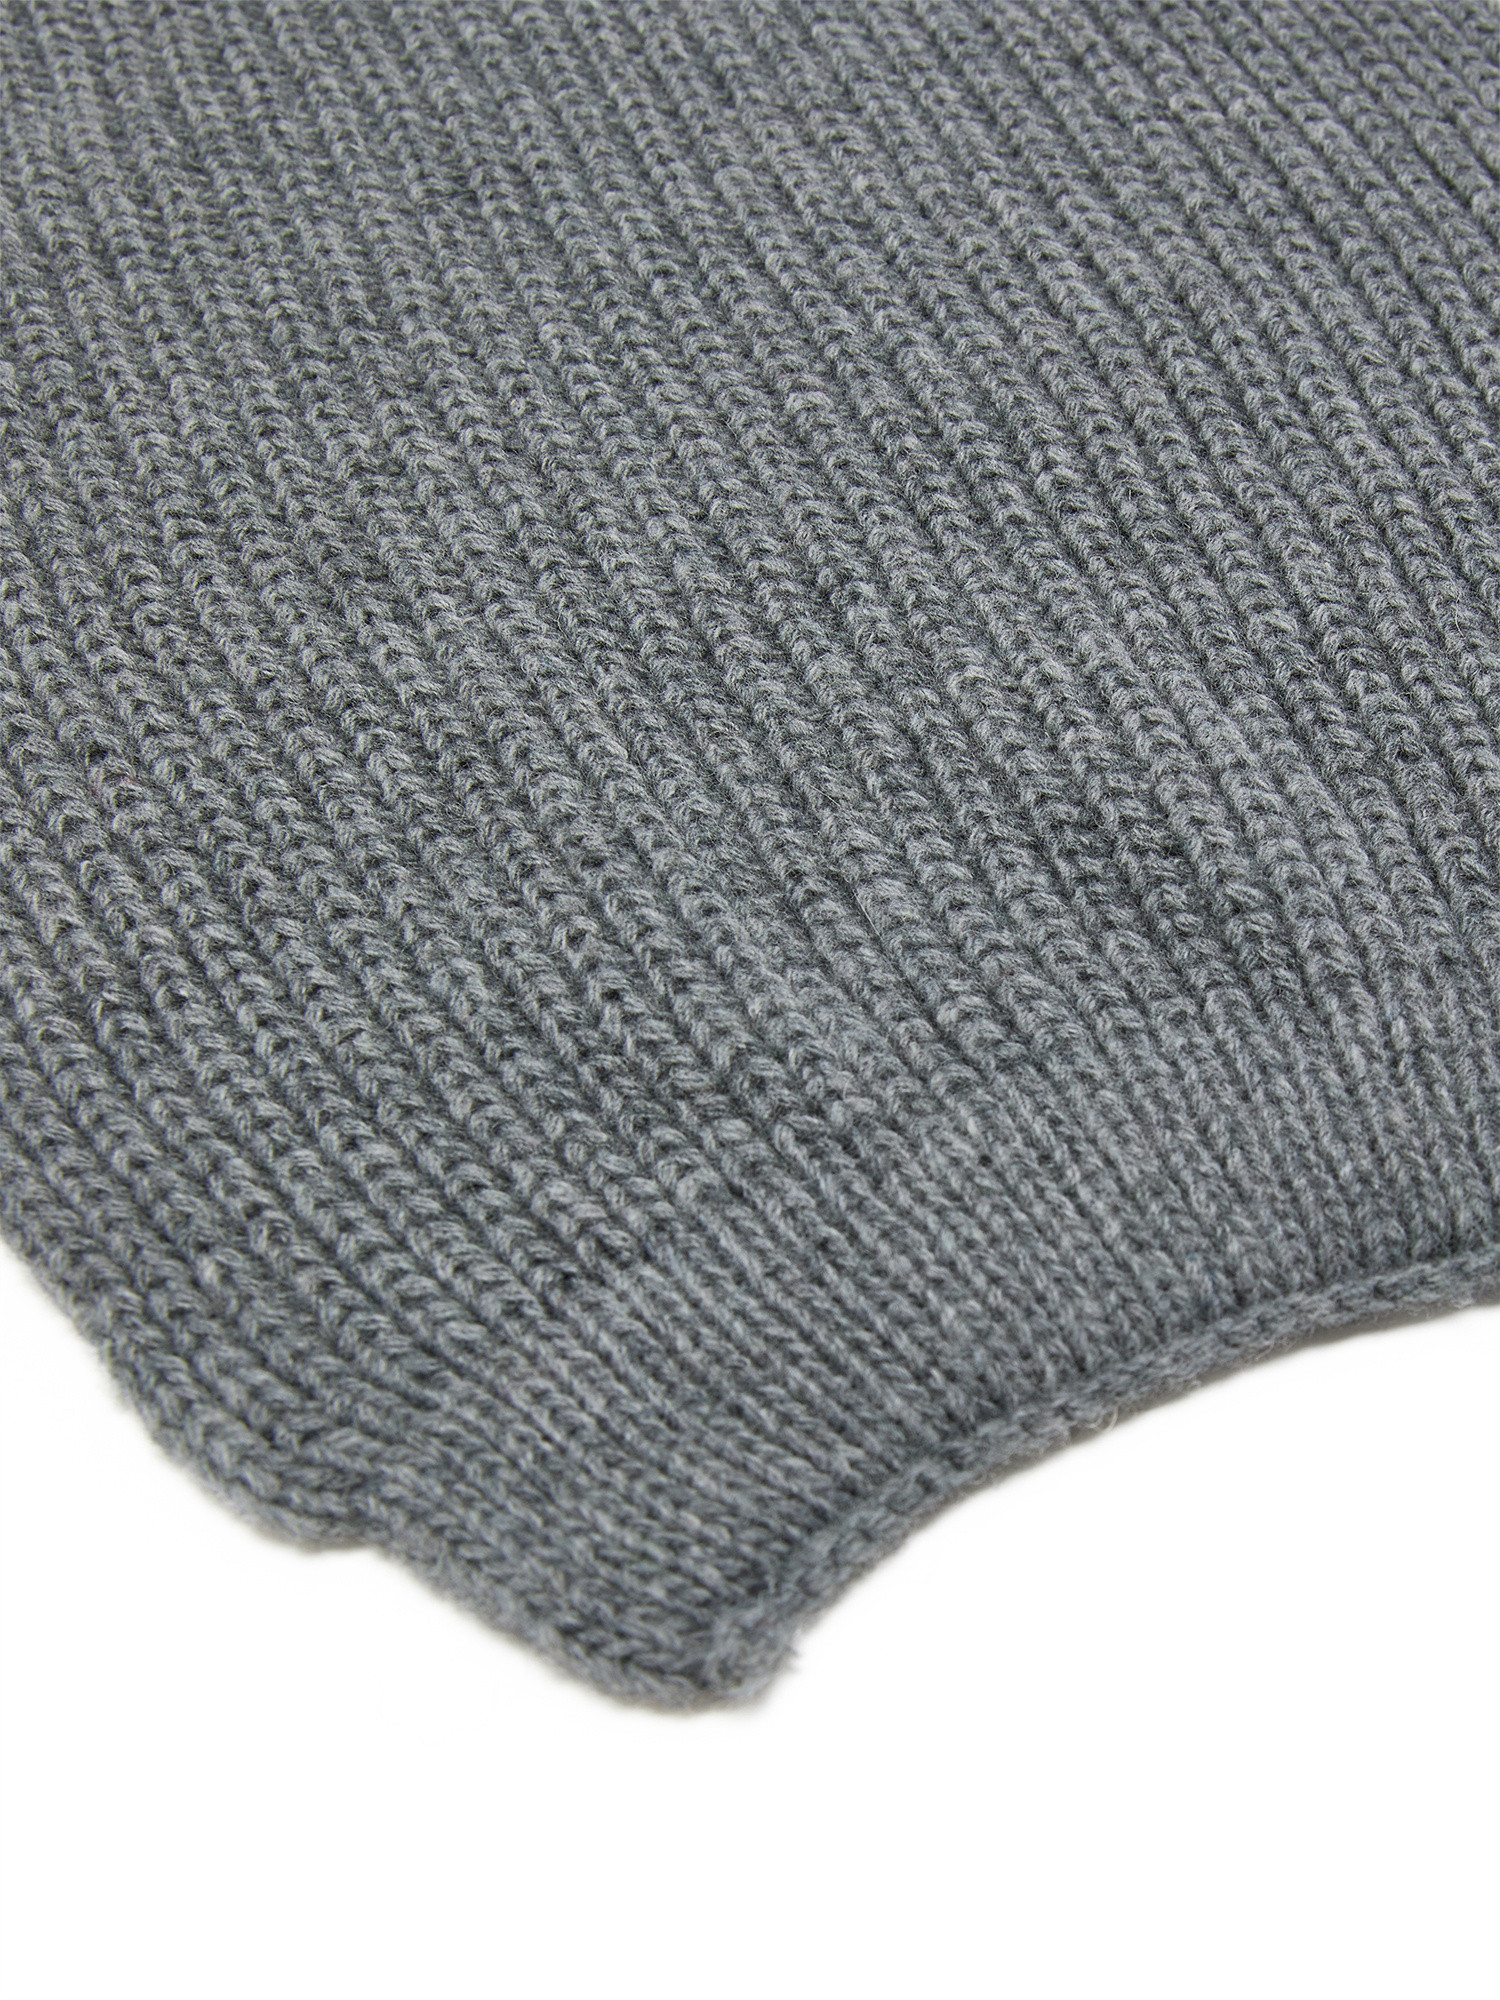 Luca D'Altieri - English rib stitch scarf, Grey, large image number 1